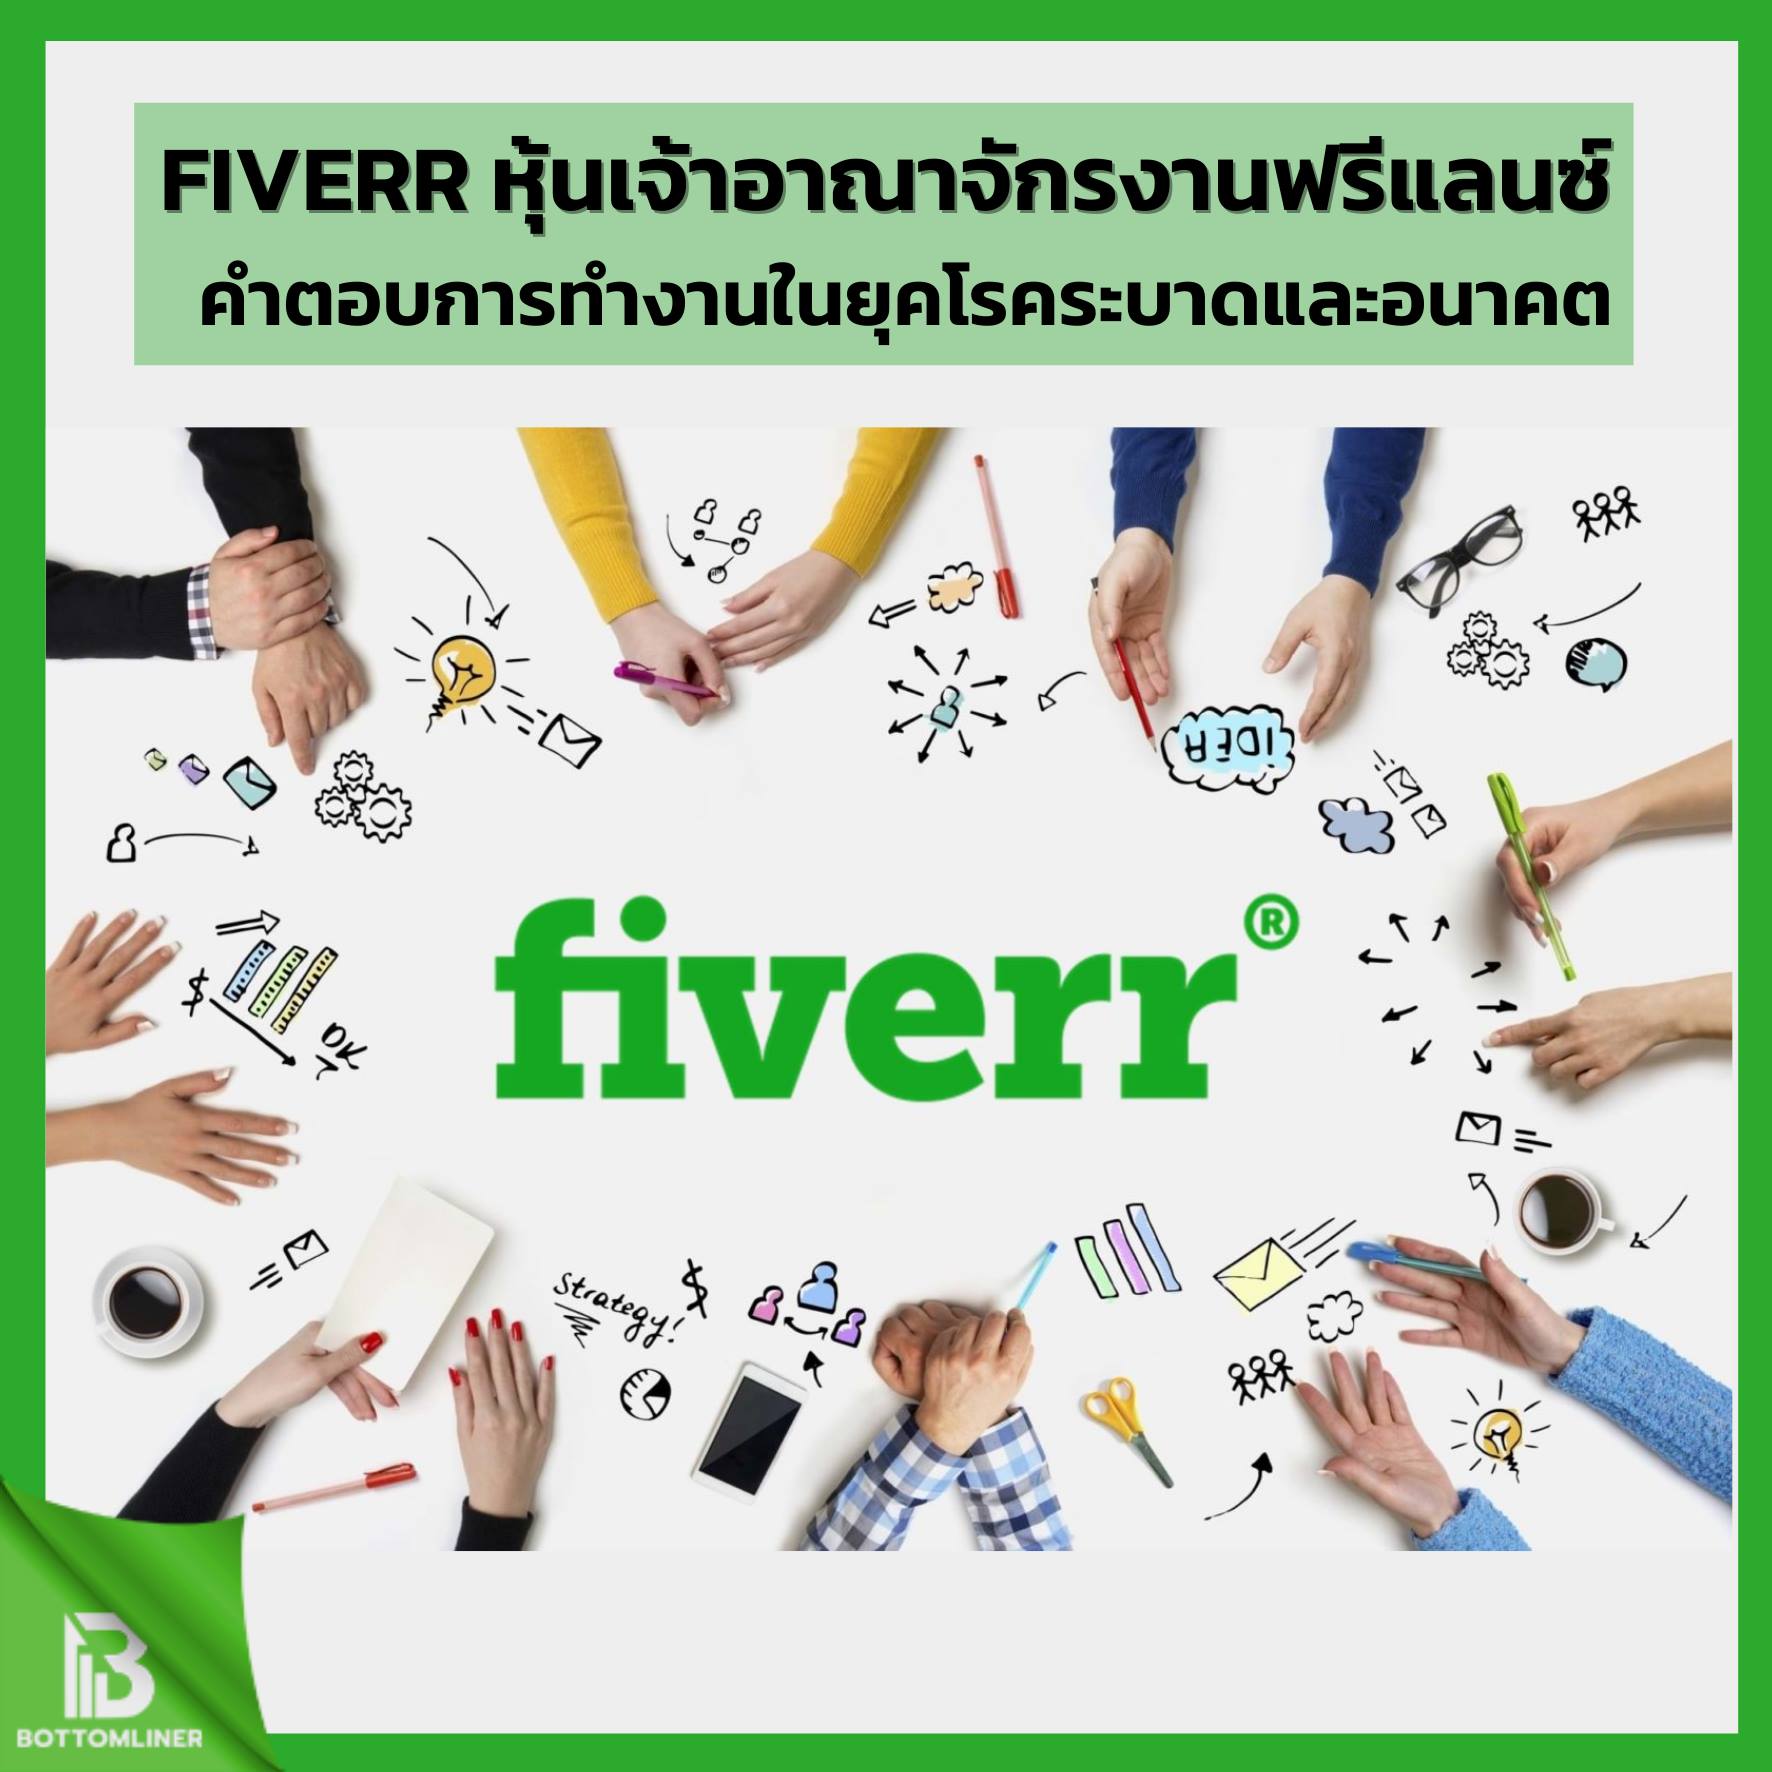 Fiverr หุ้นเจ้าอาณาจักรฟรีแลนซ์ กับ Gen Millennial Workforce